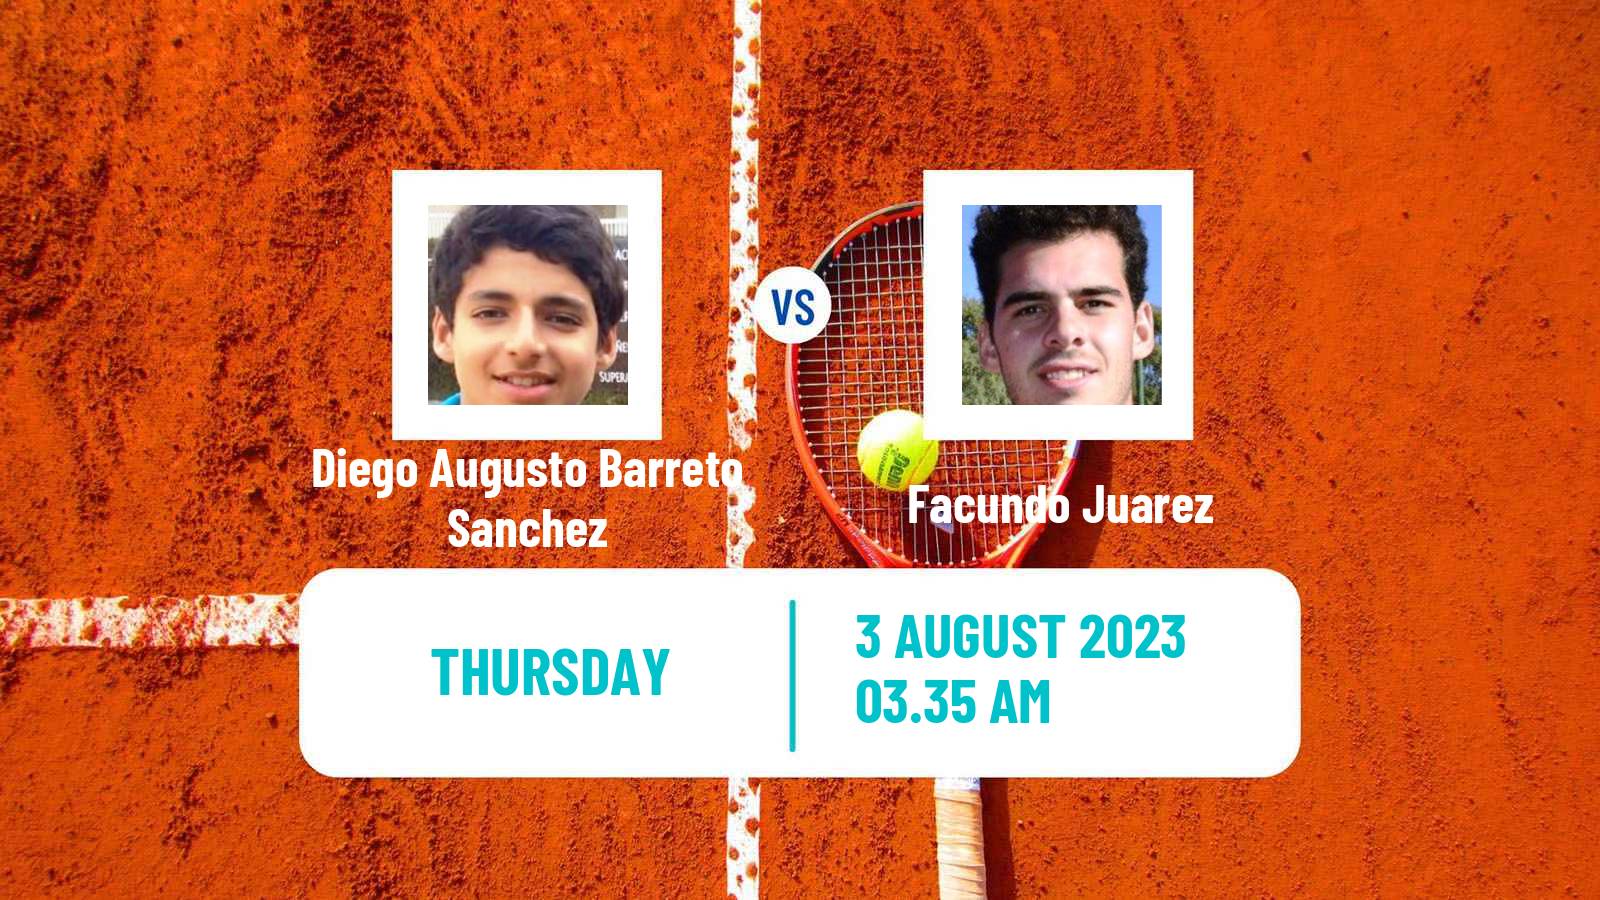 Tennis ITF M15 Xativa Men Diego Augusto Barreto Sanchez - Facundo Juarez